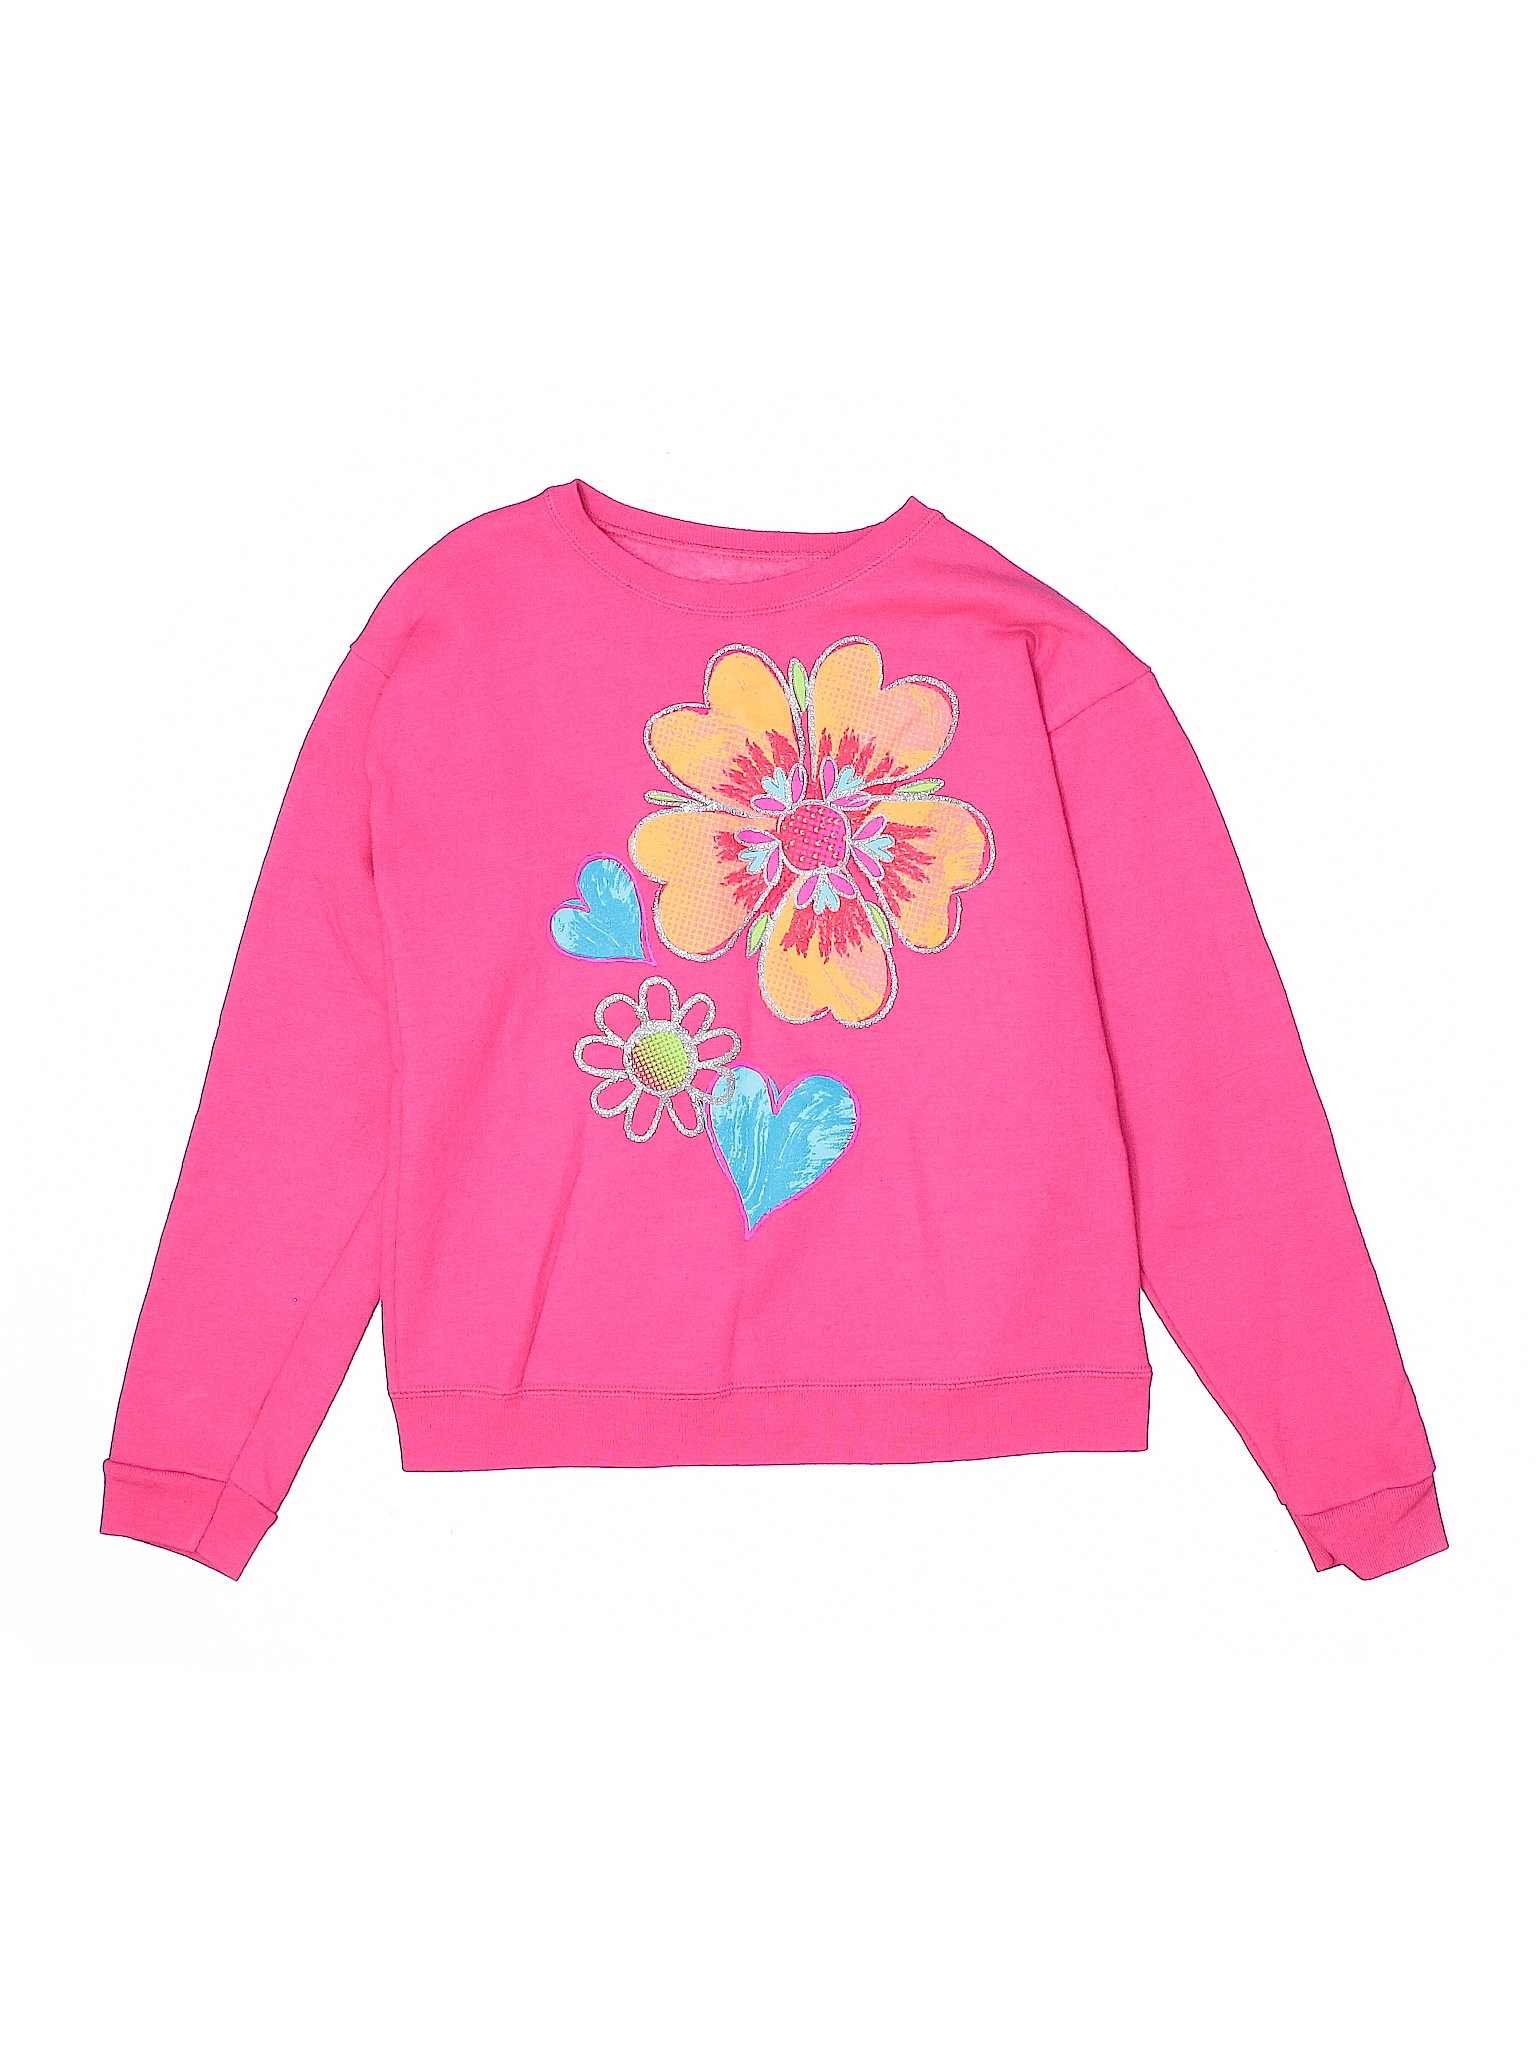 Hanes Girls Pink Sweatshirt L Youth Ebay